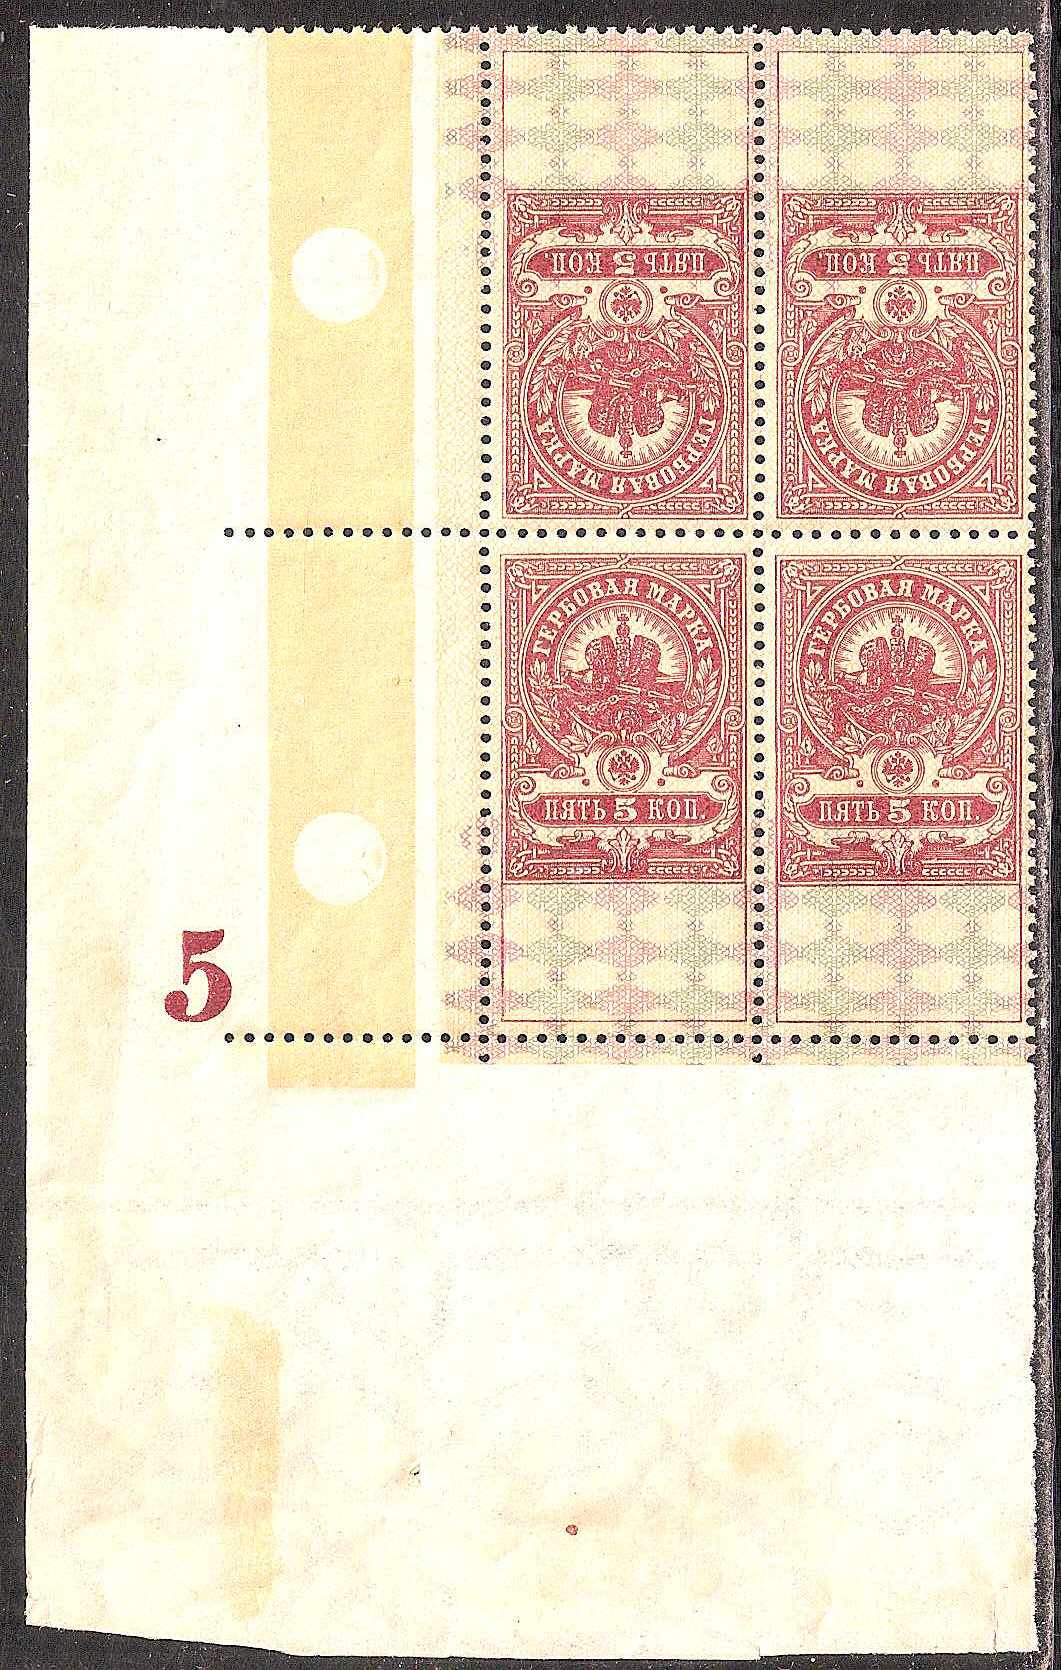 Russia Specialized - Postal Savings & Revenue Savings Stamps Scott AR15 